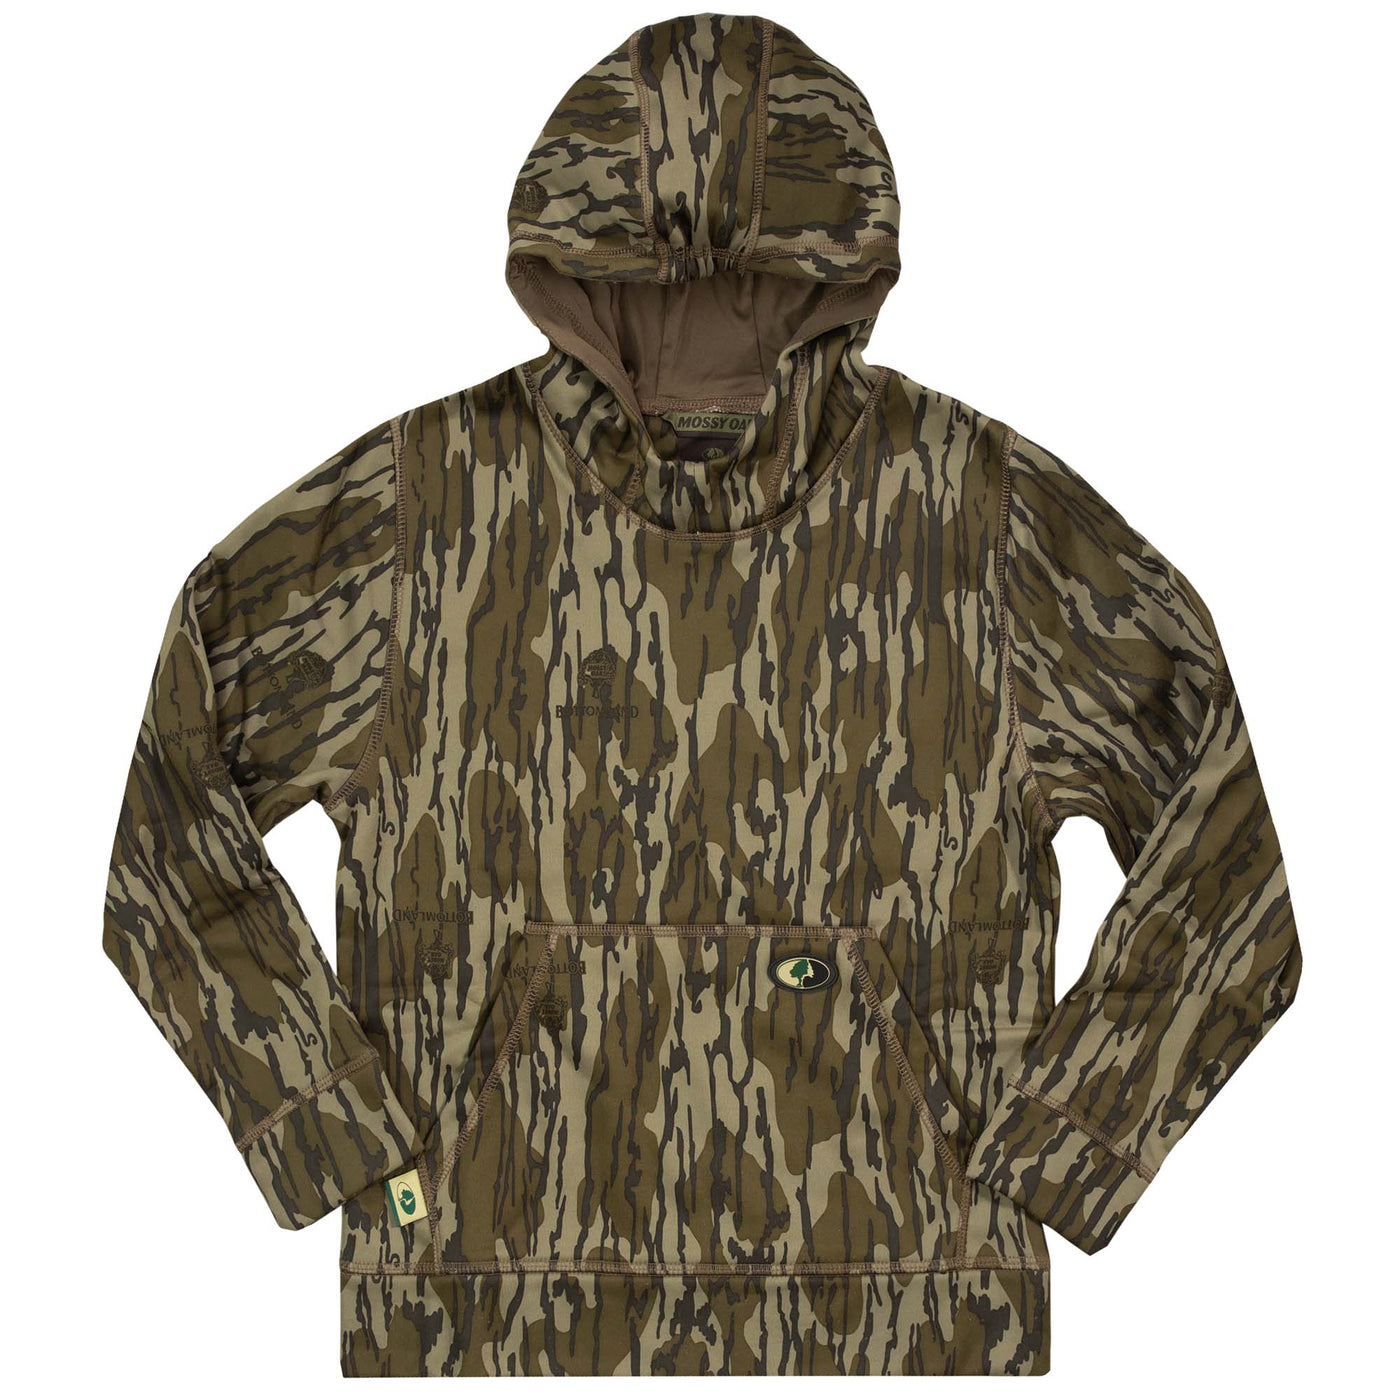 Mossy Oak® Camo Performance Hood - Bottomland / XL  Fishing shirts,  Performance shirts, Mossy oak camo